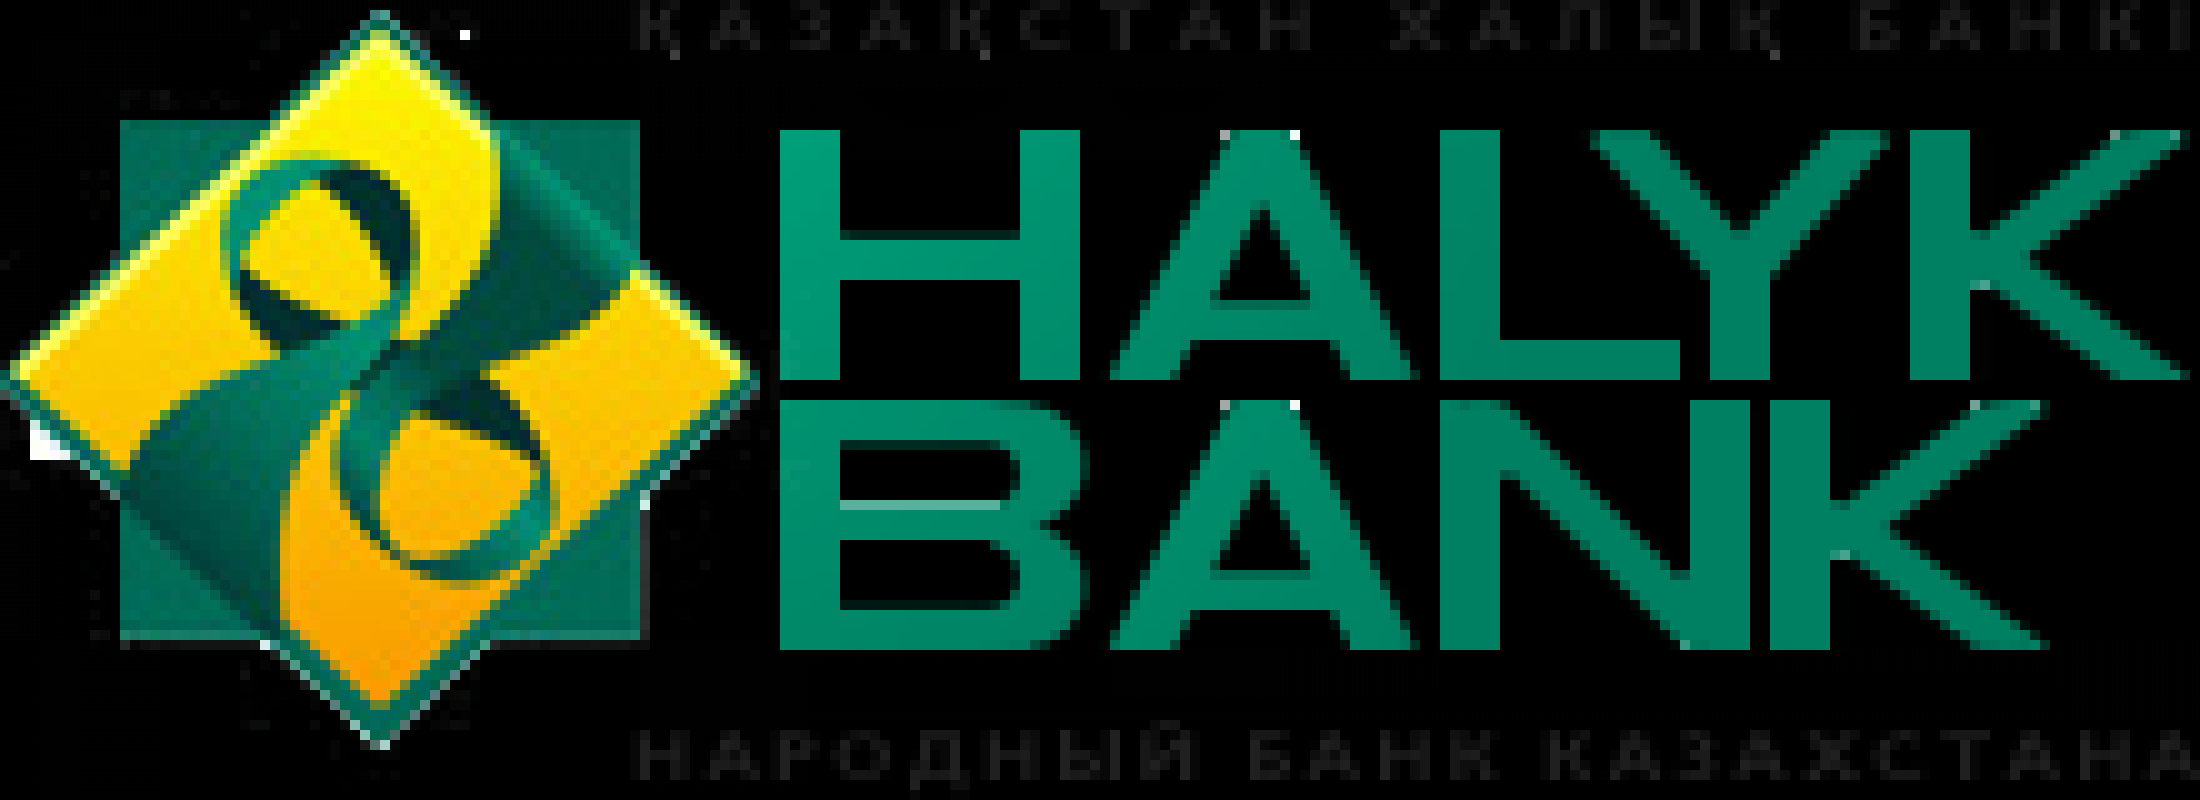 Фото Народный банк Казахстана Алматы. 